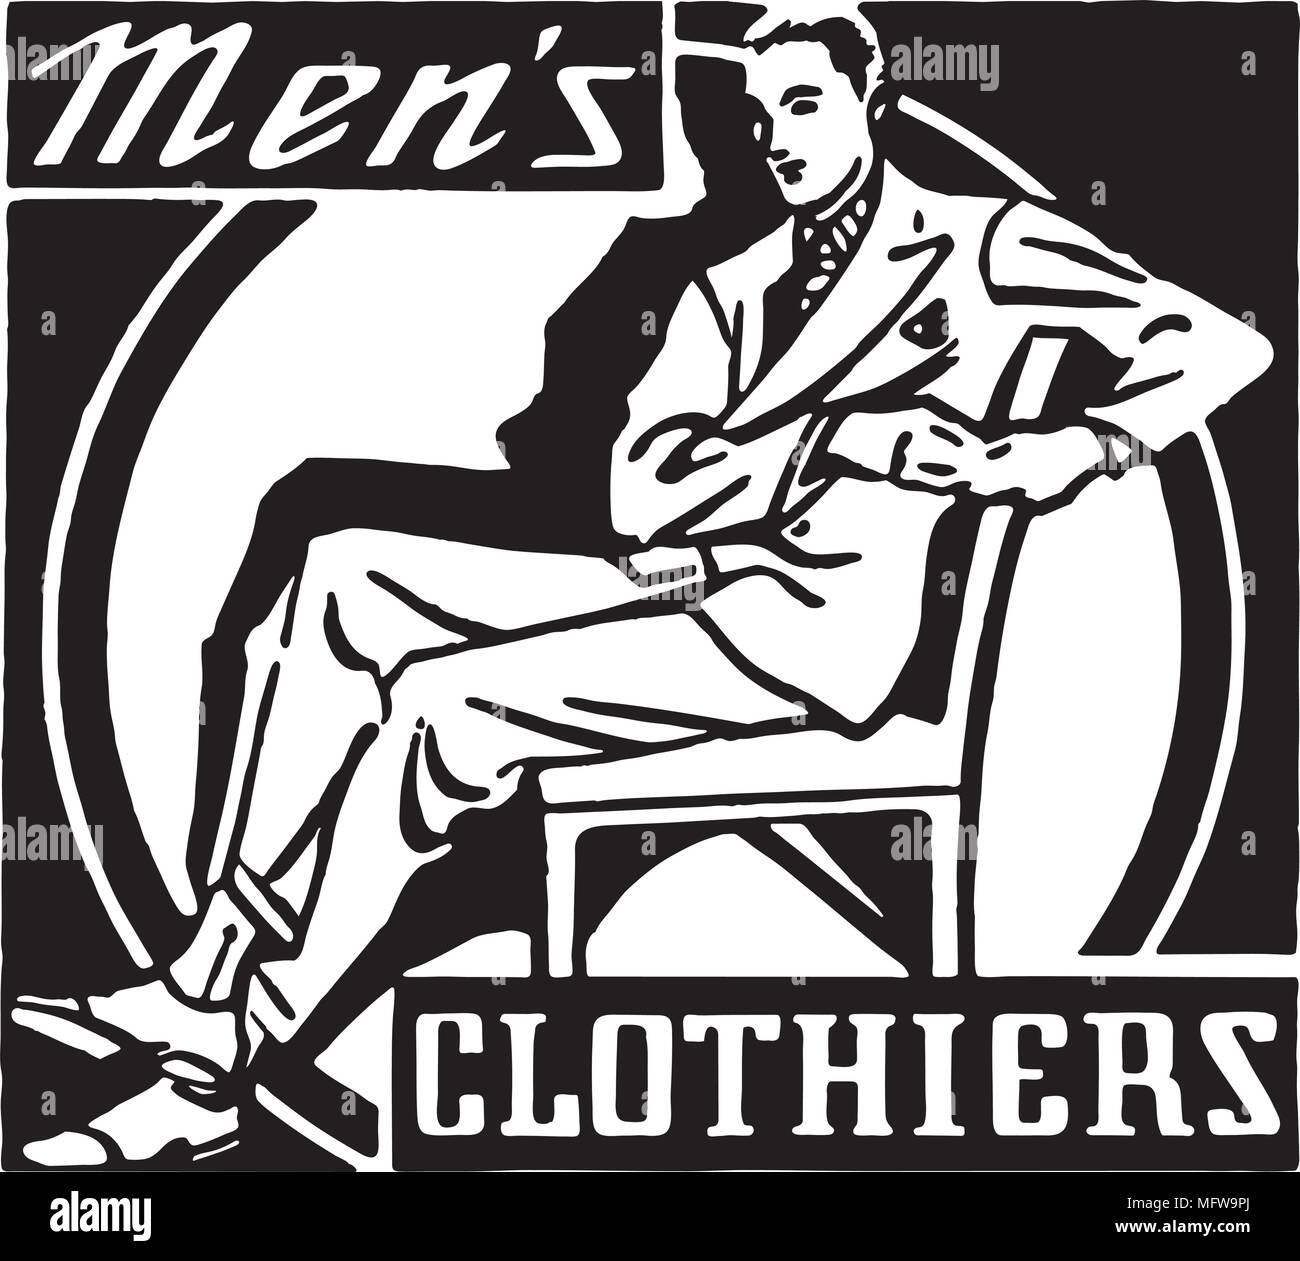 Men's Clothiers - Retro Ad Art Banner Stock Vector